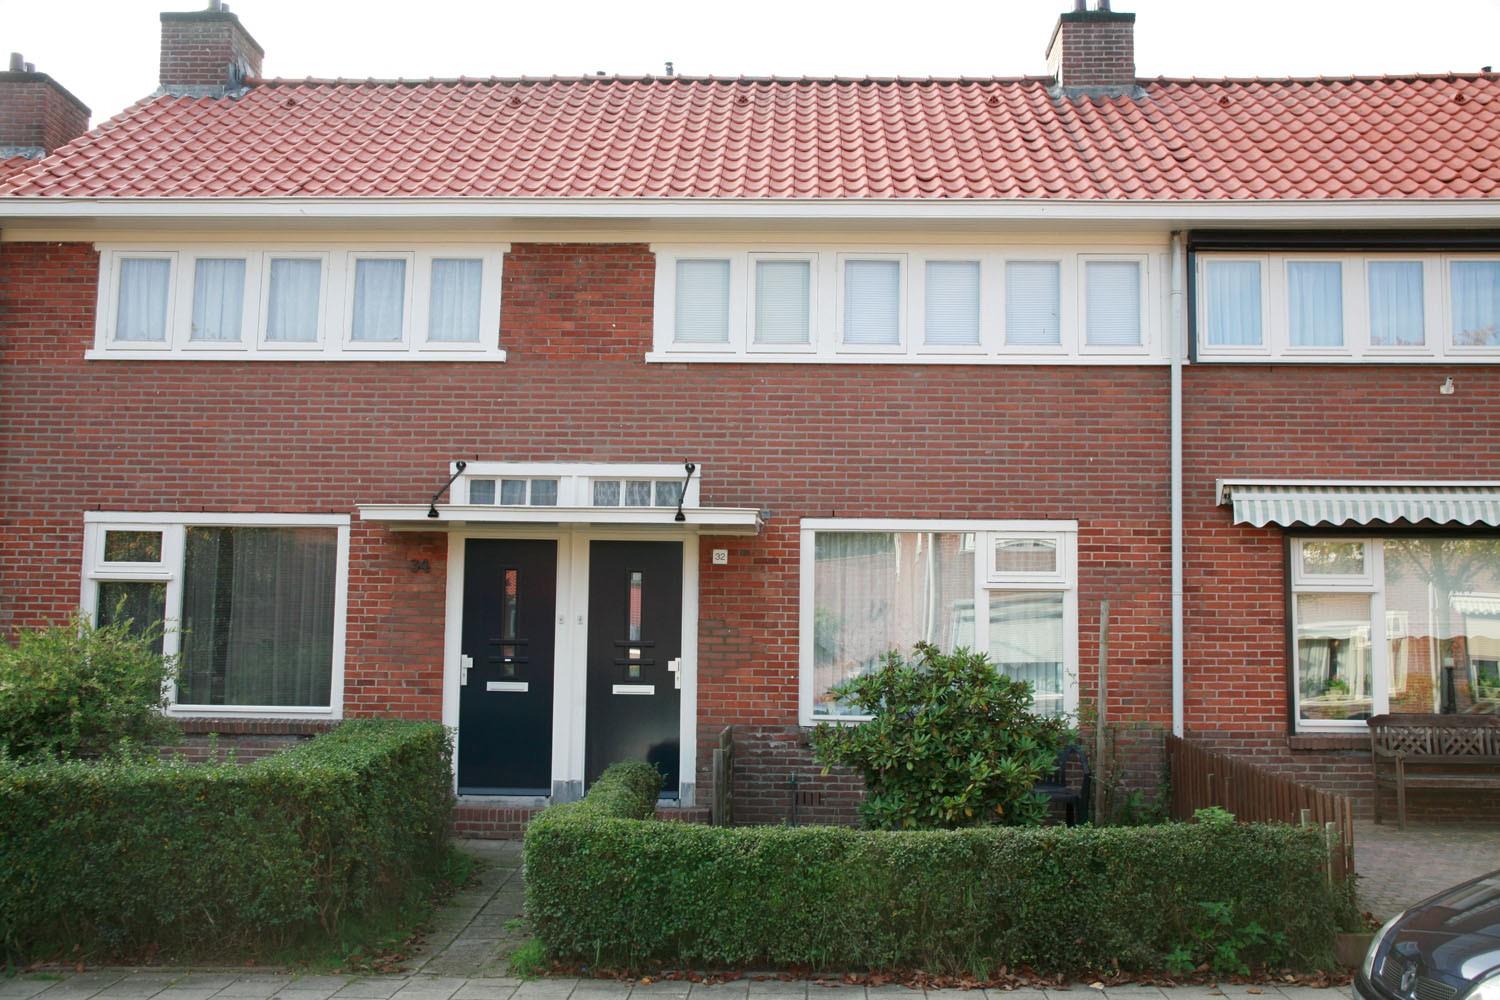 Johan van Arnhemstraat 32, 6824 EP Arnhem, Nederland